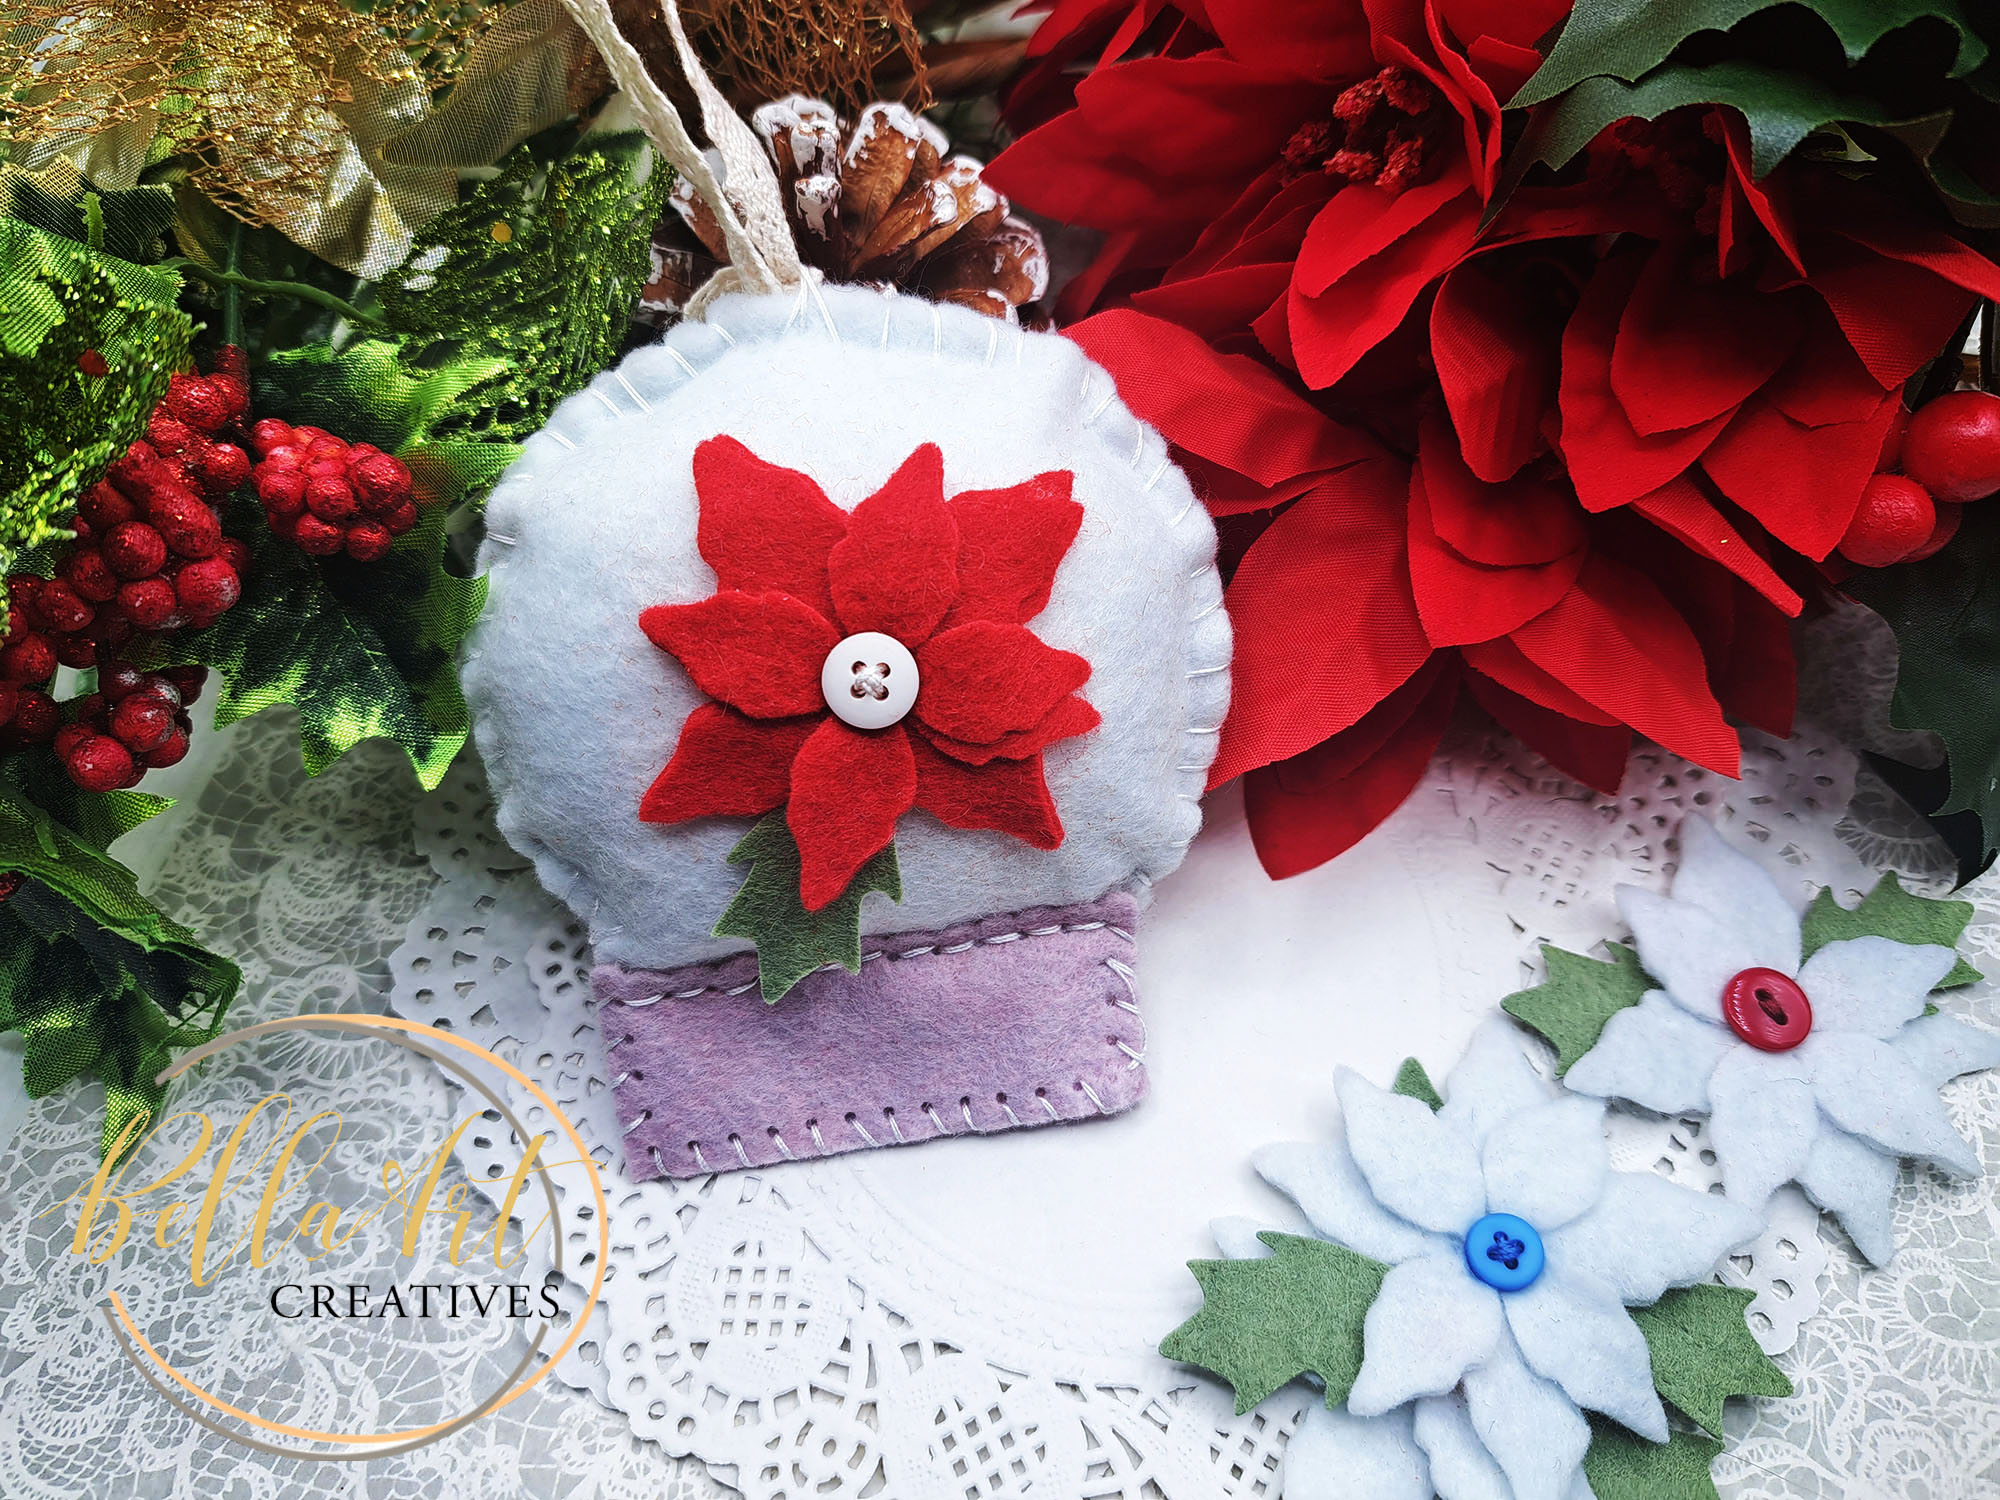 Another Stitched Snow Globe Ornament with Pretty Felt Poinsietta Flowers